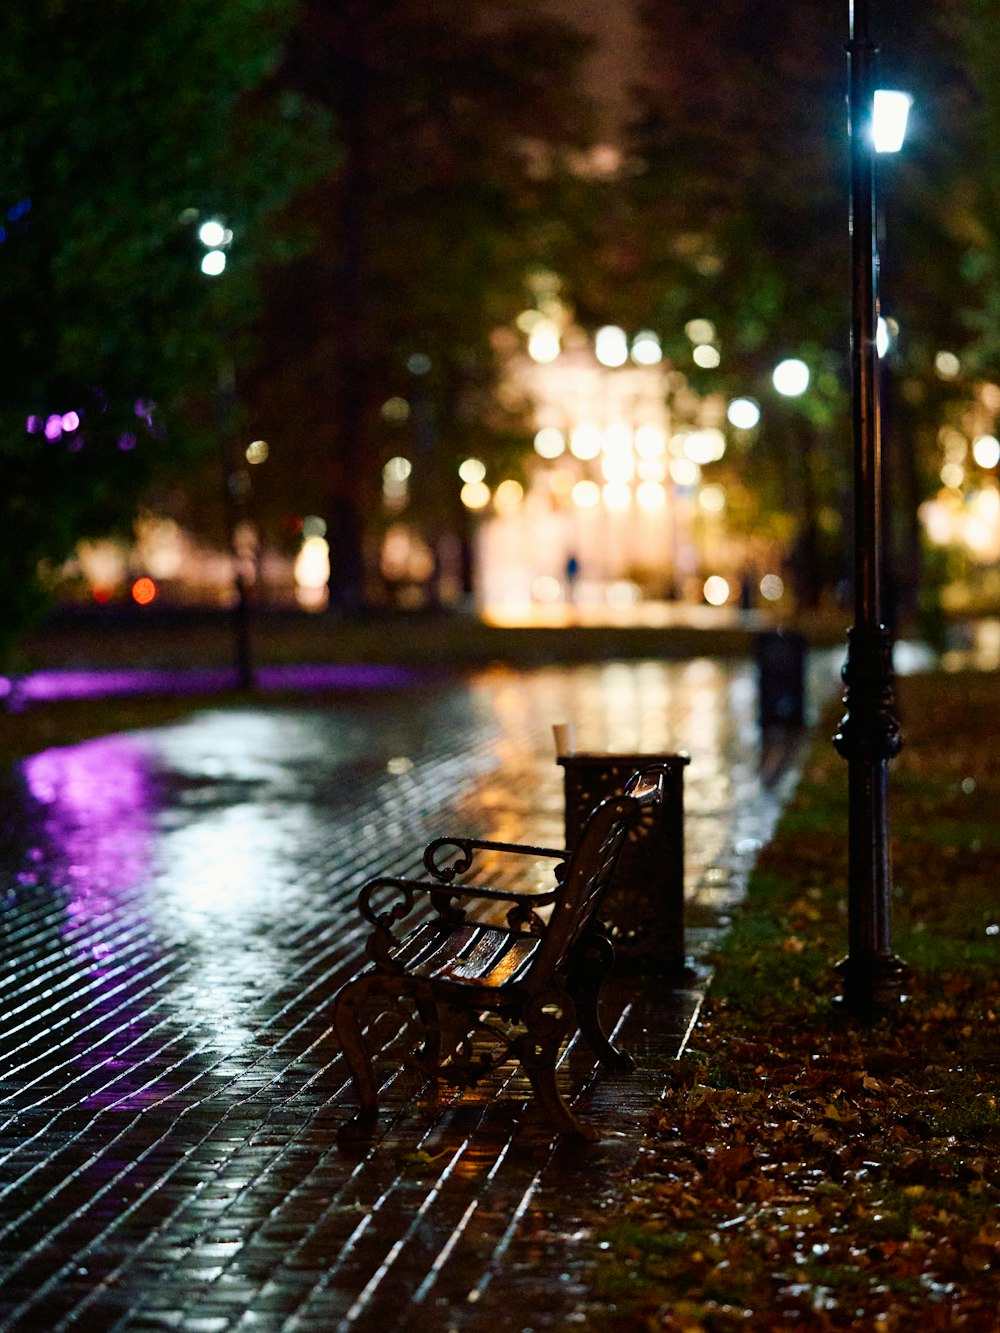 una panchina del parco seduta su un marciapiede bagnato di notte